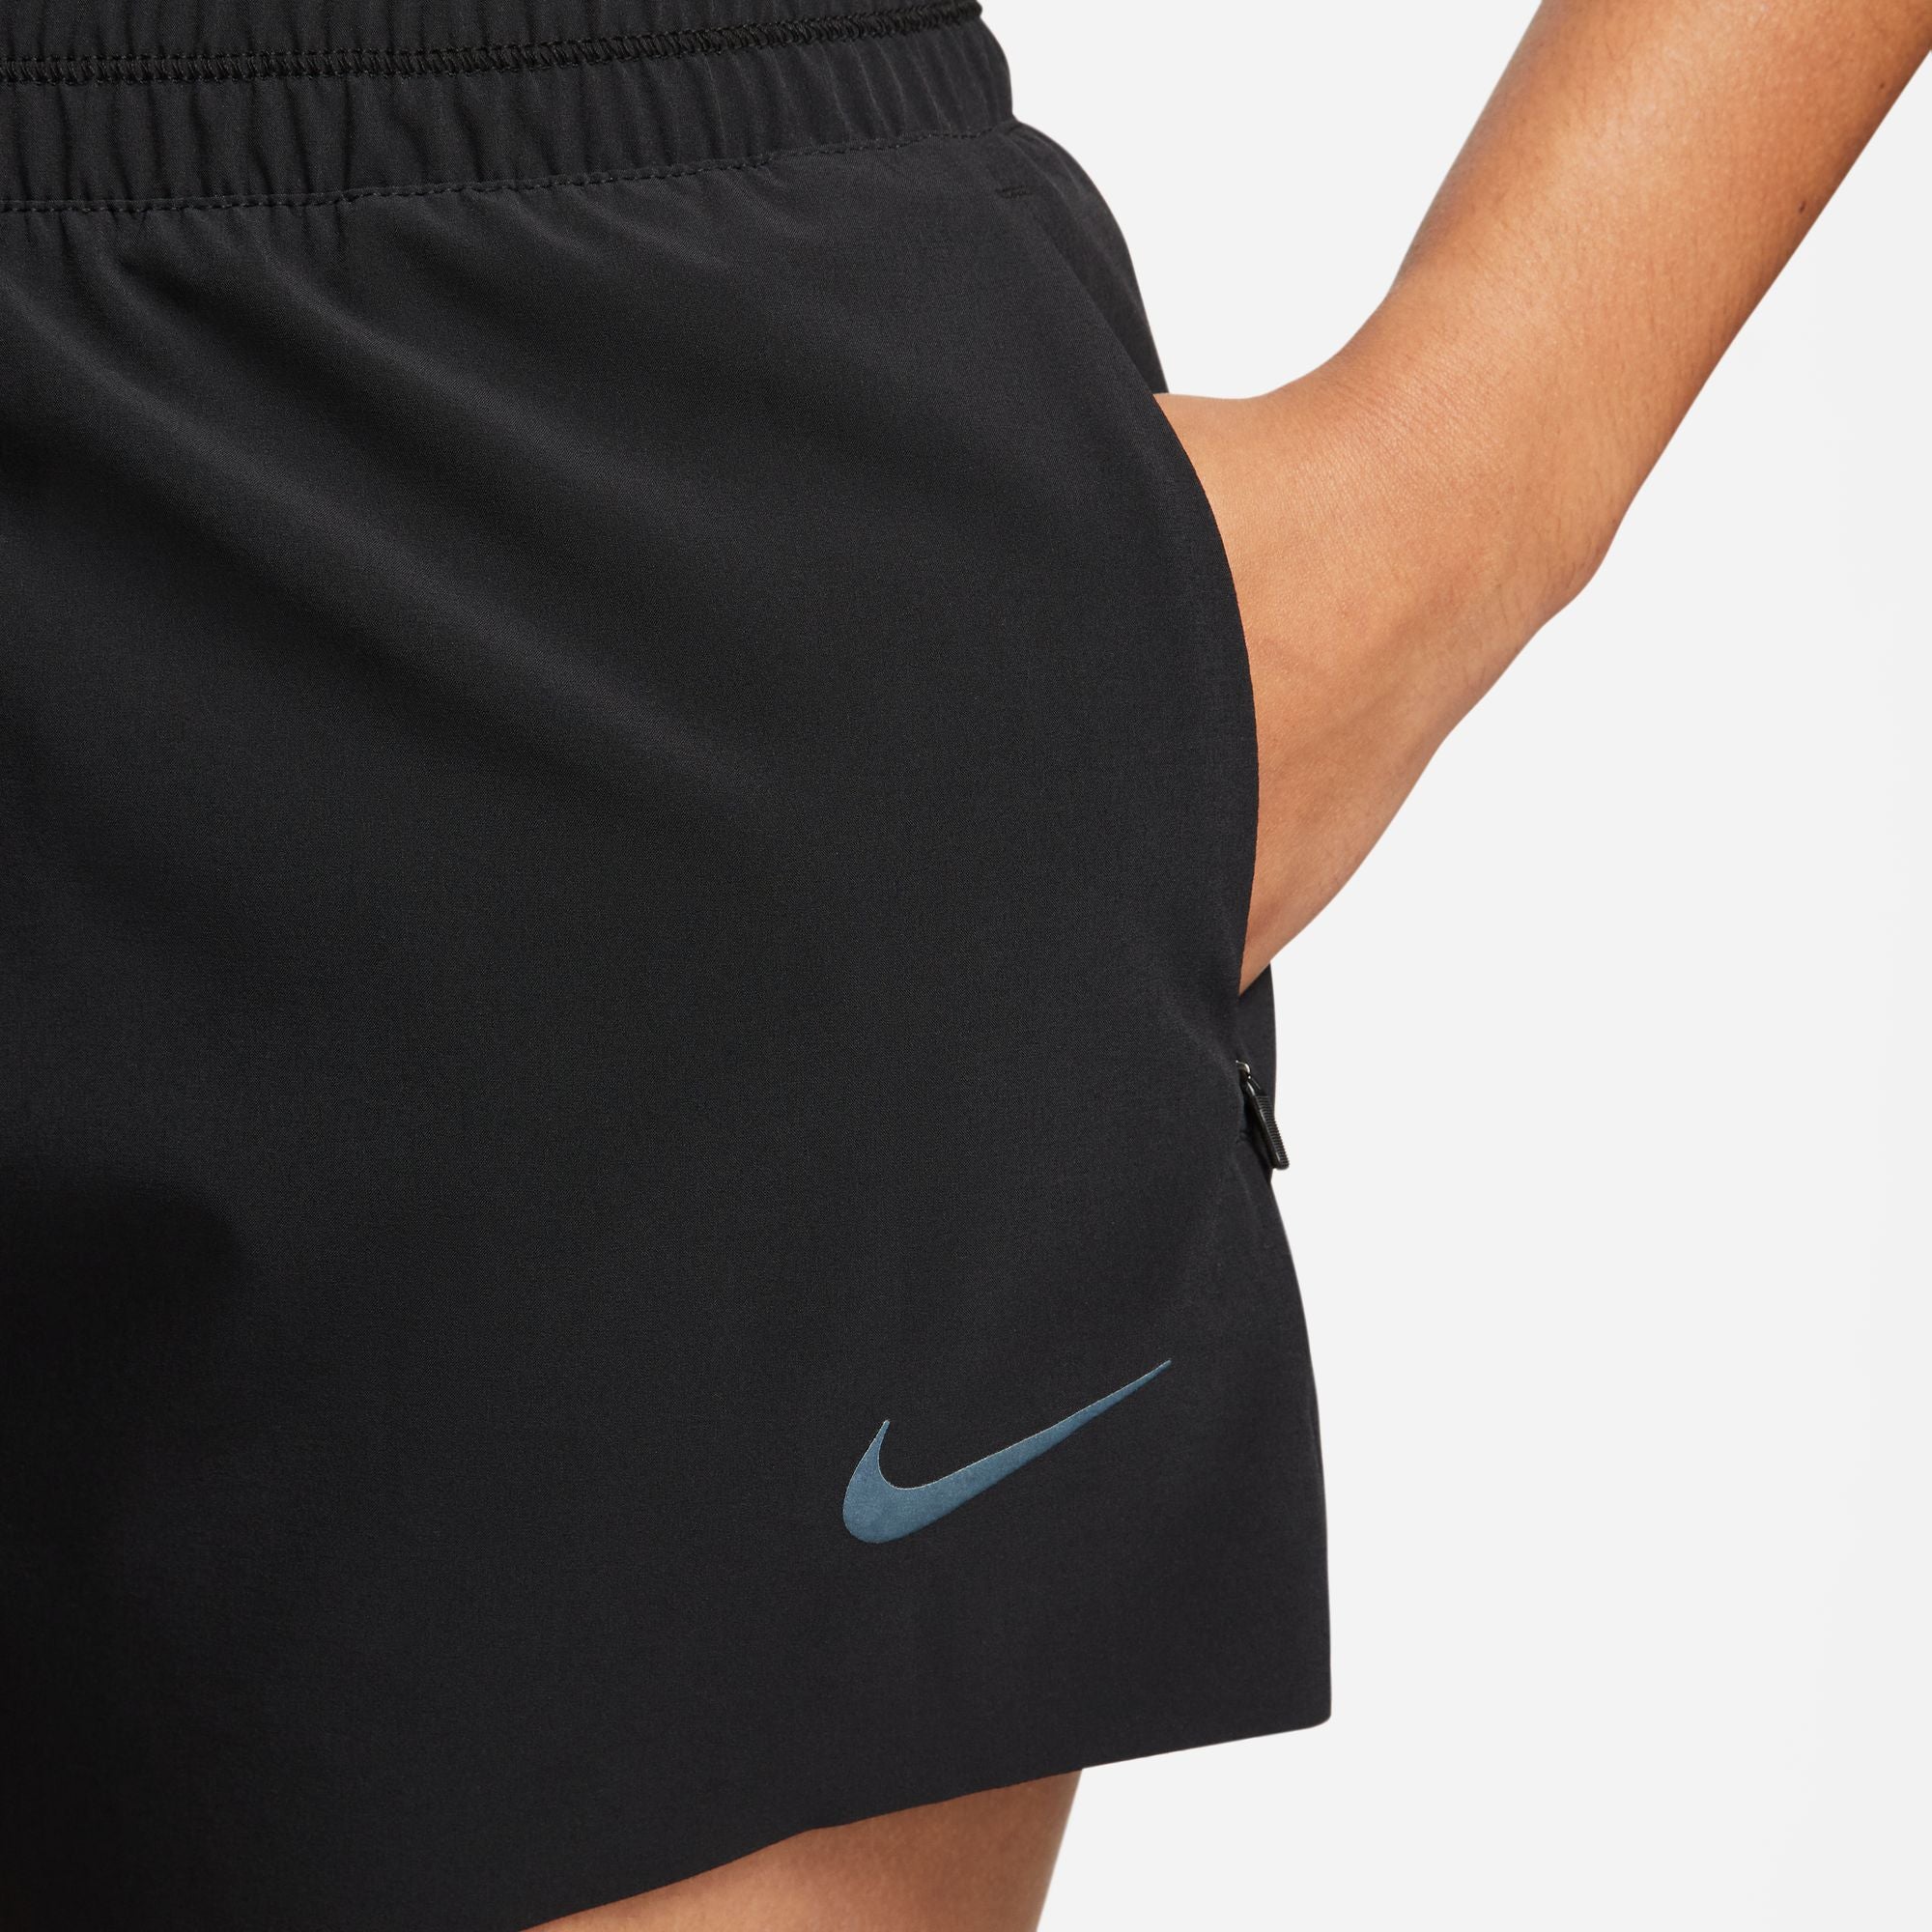 Nike Dri-FIT Running Division Shorts - Women's